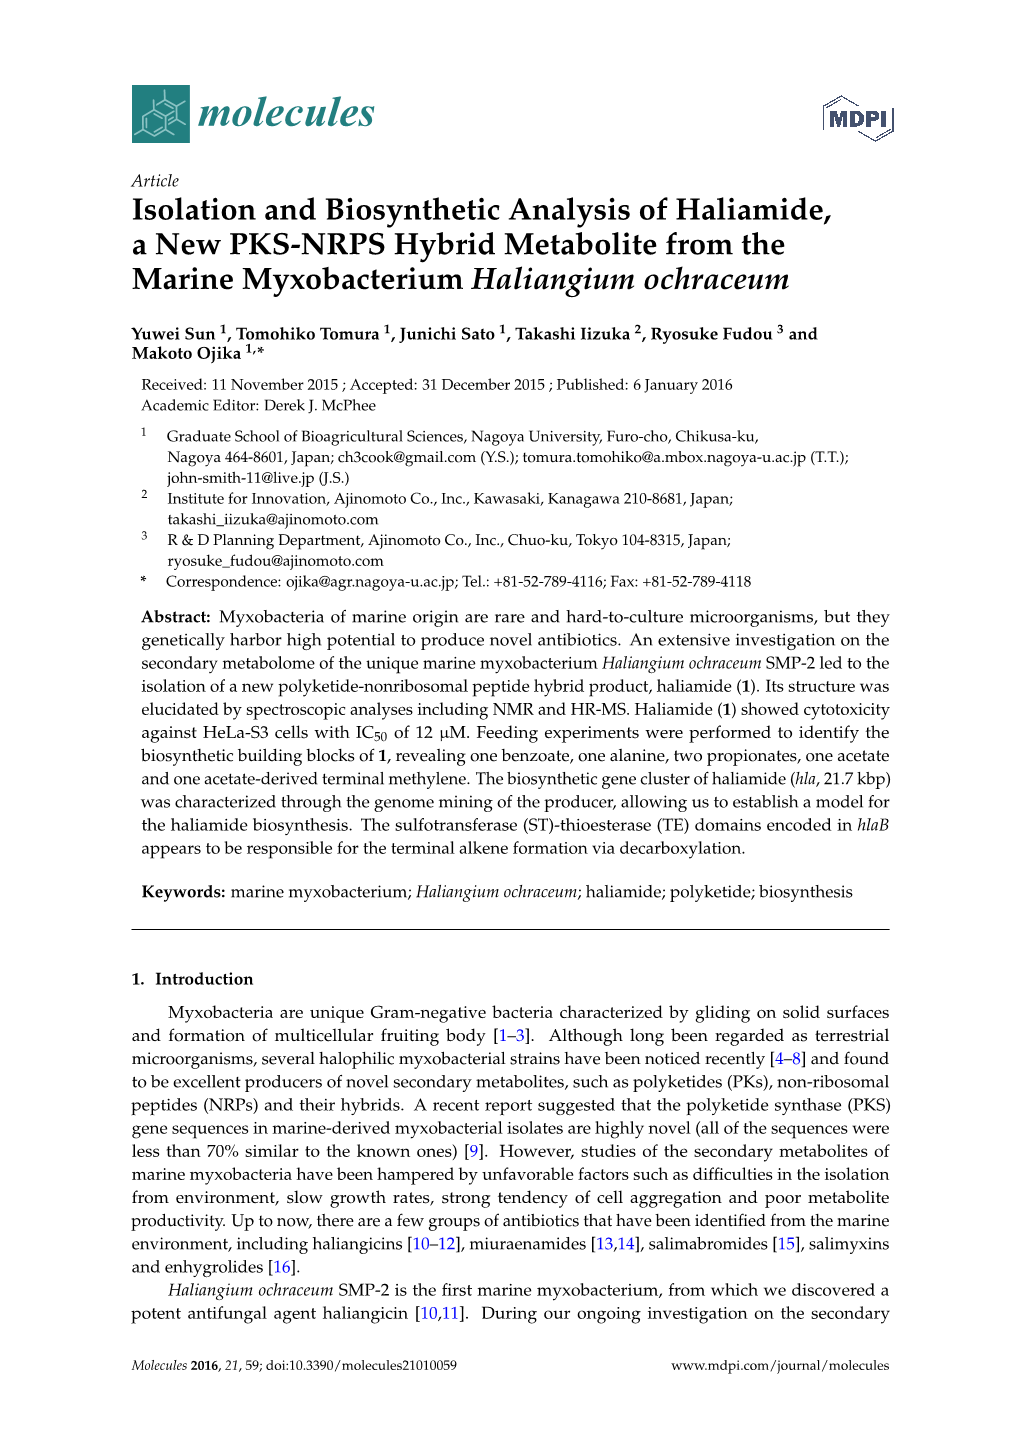 Isolation and Biosynthetic Analysis of Haliamide, a New PKS-NRPS Hybrid Metabolite from the Marine Myxobacterium Haliangium Ochraceum